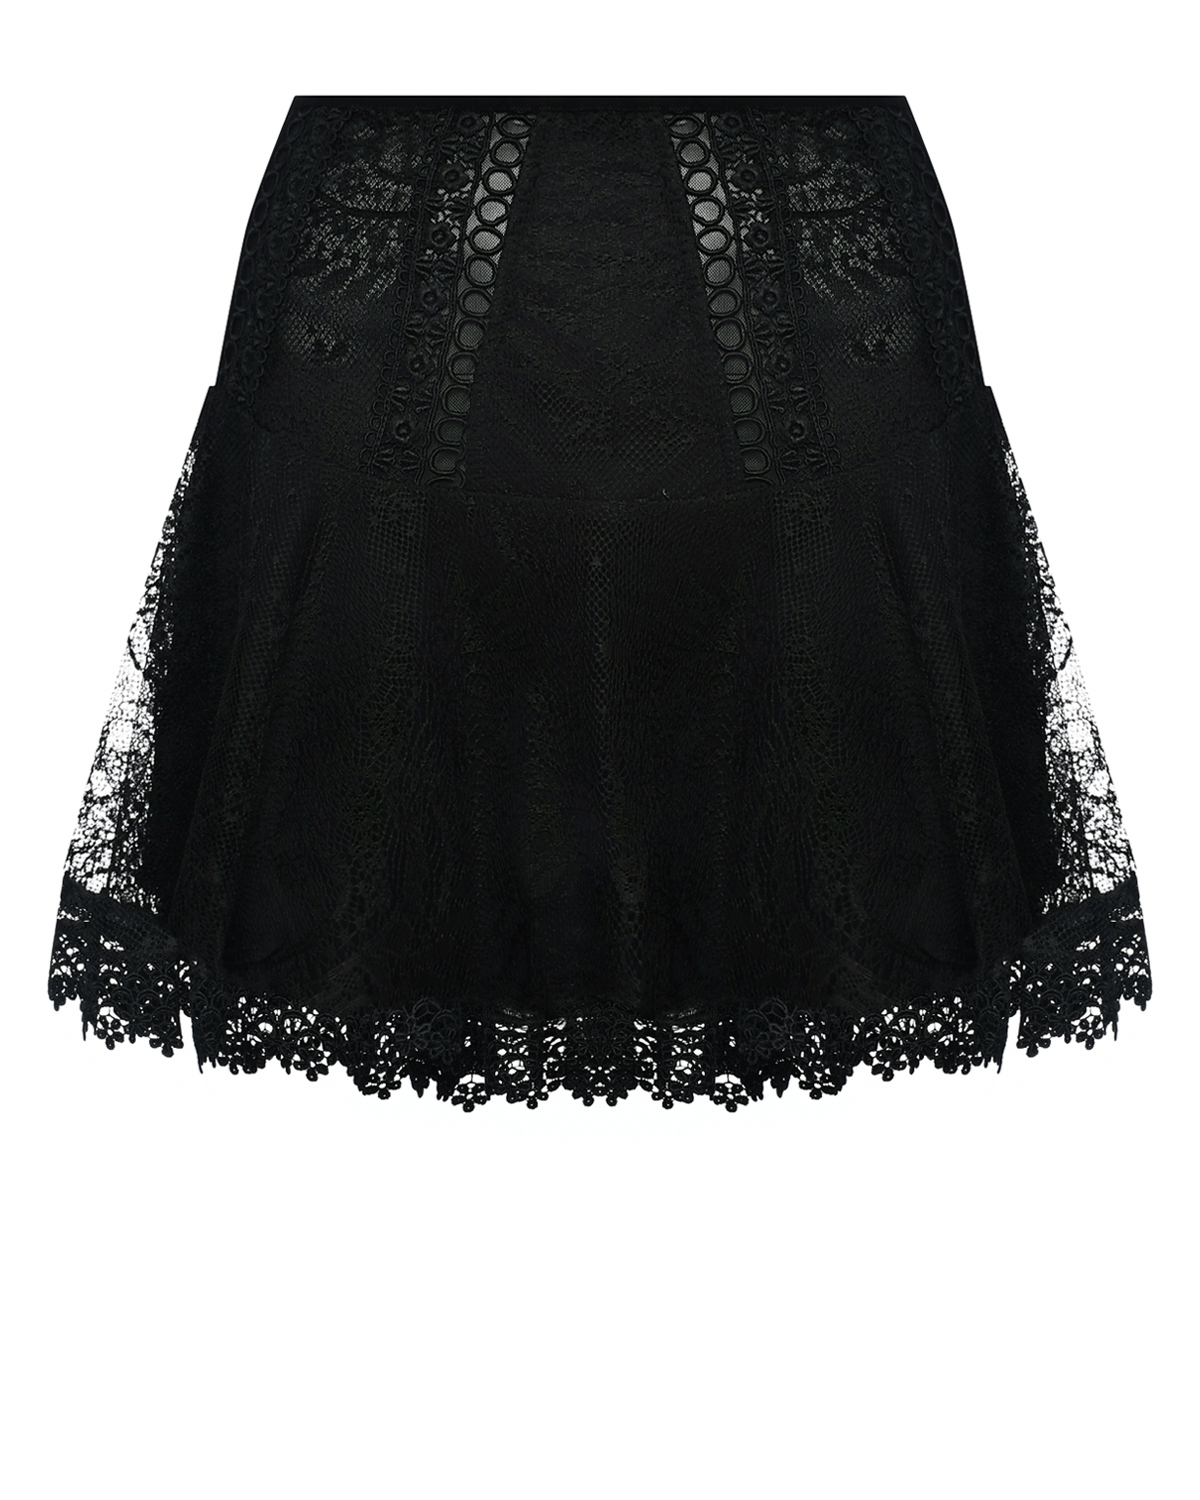 Мини-юбка с гипюром, черная Charo Ruiz, размер 40, цвет нет цвета